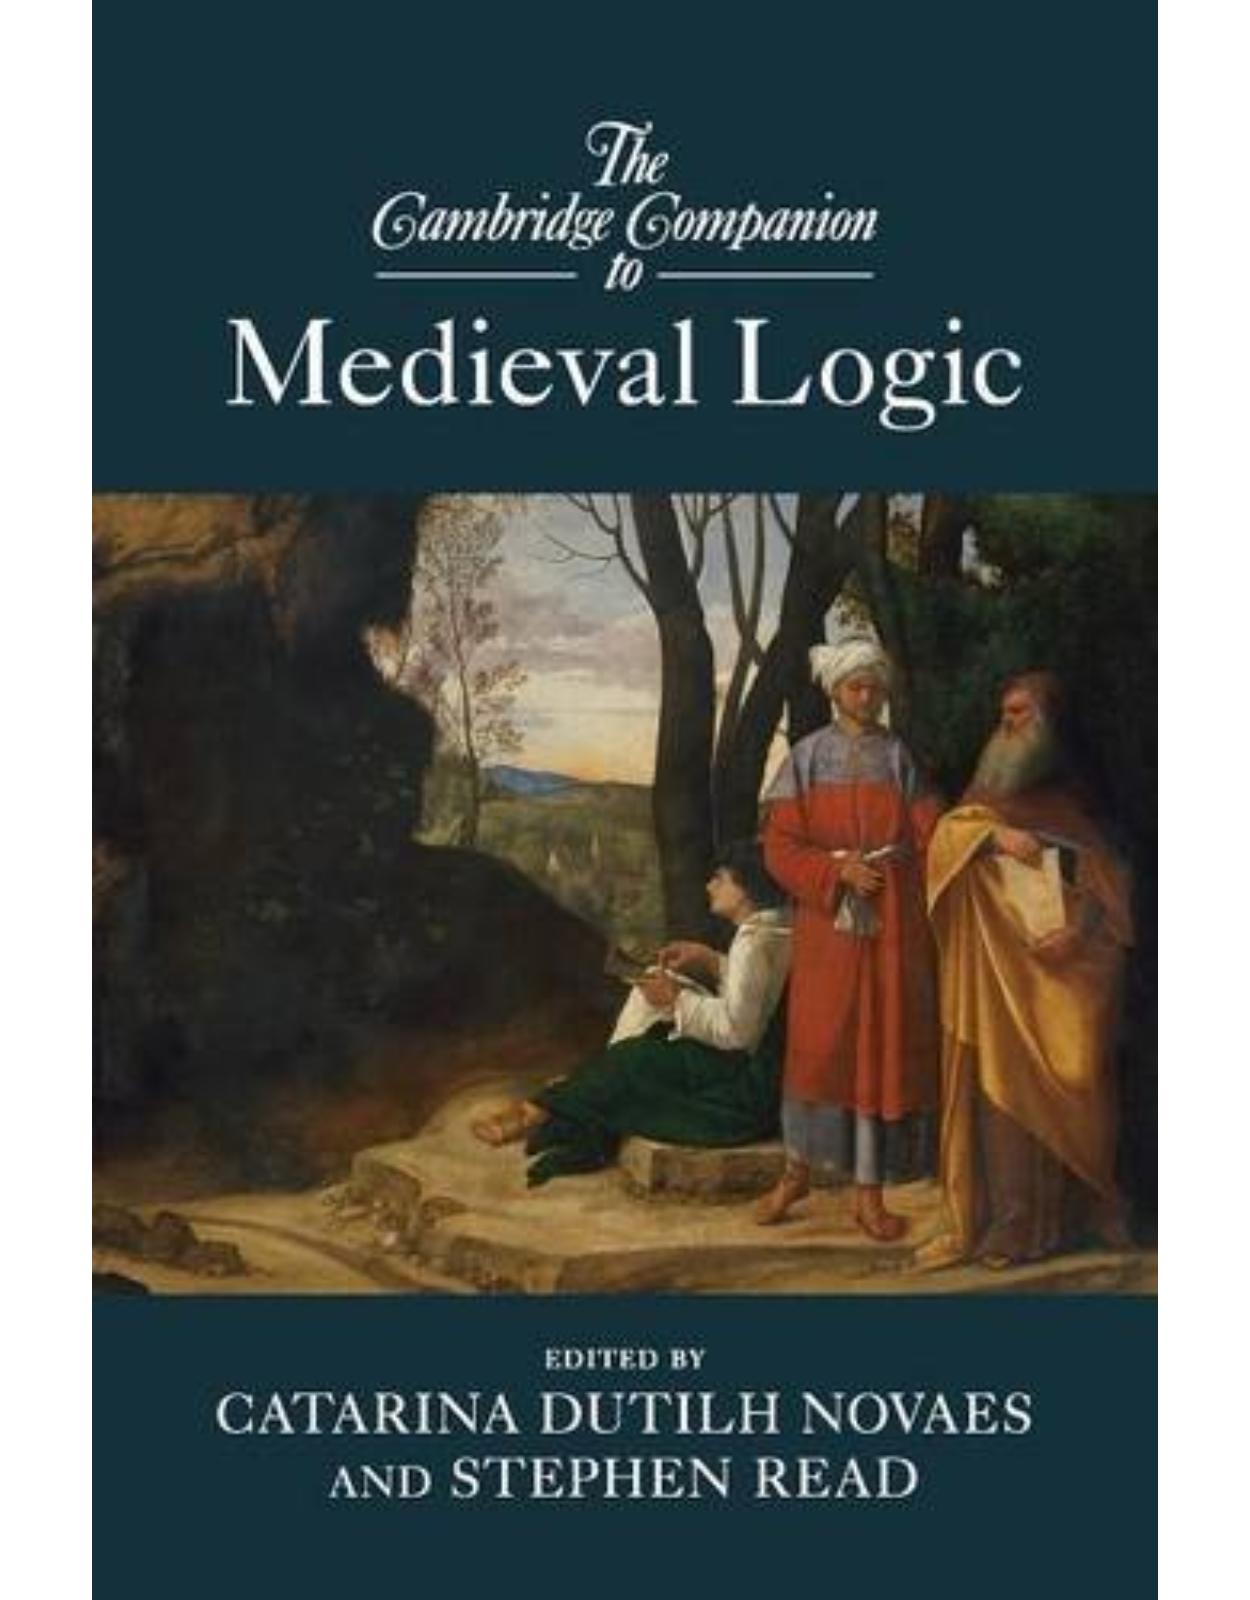 The Cambridge Companion to Medieval Logic (Cambridge Companions to Philosophy)